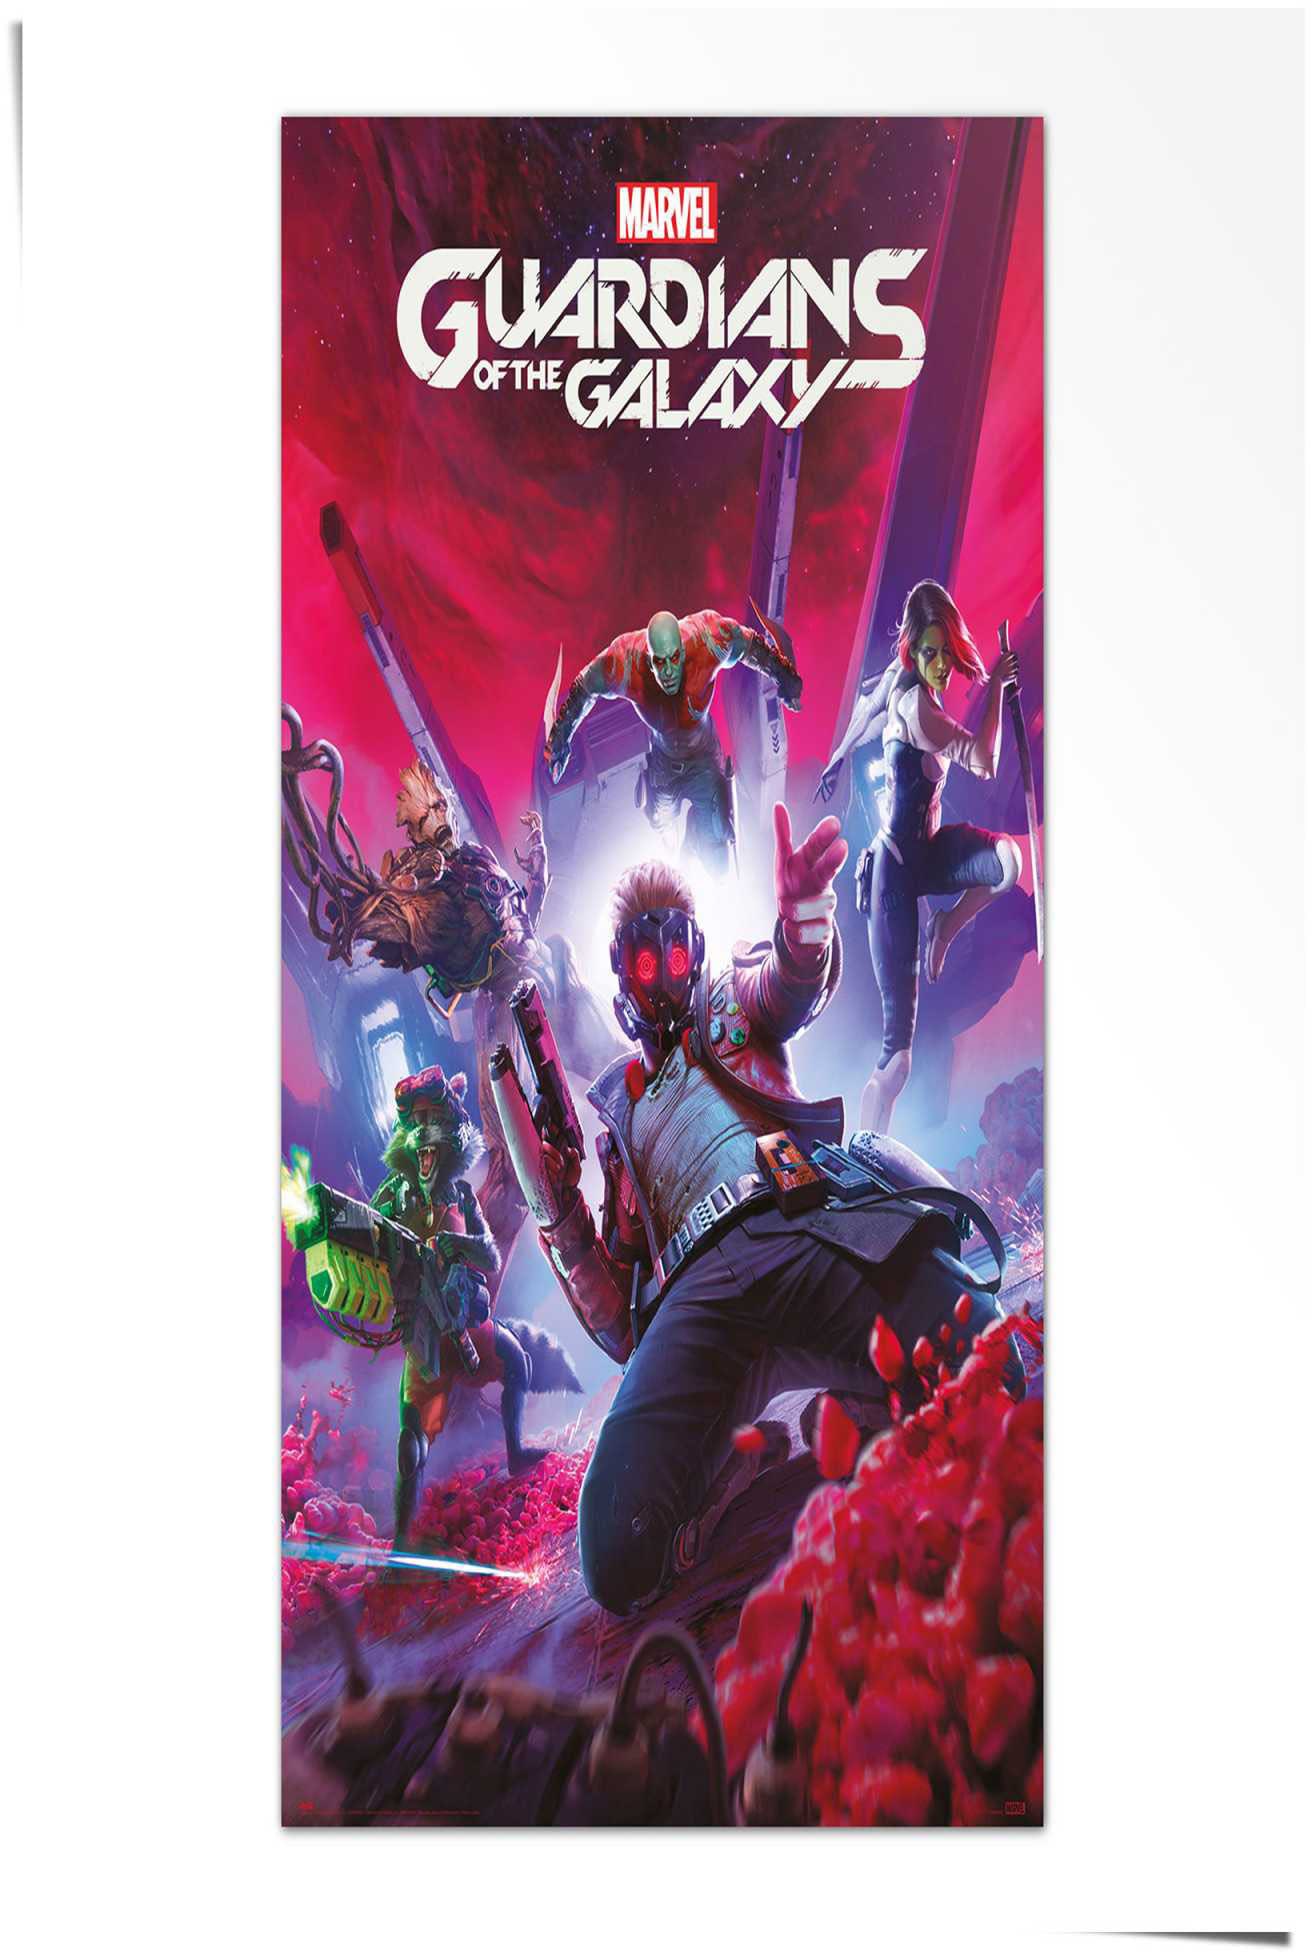 Reinders Poster "Guardians of the Galaxy" von Reinders!